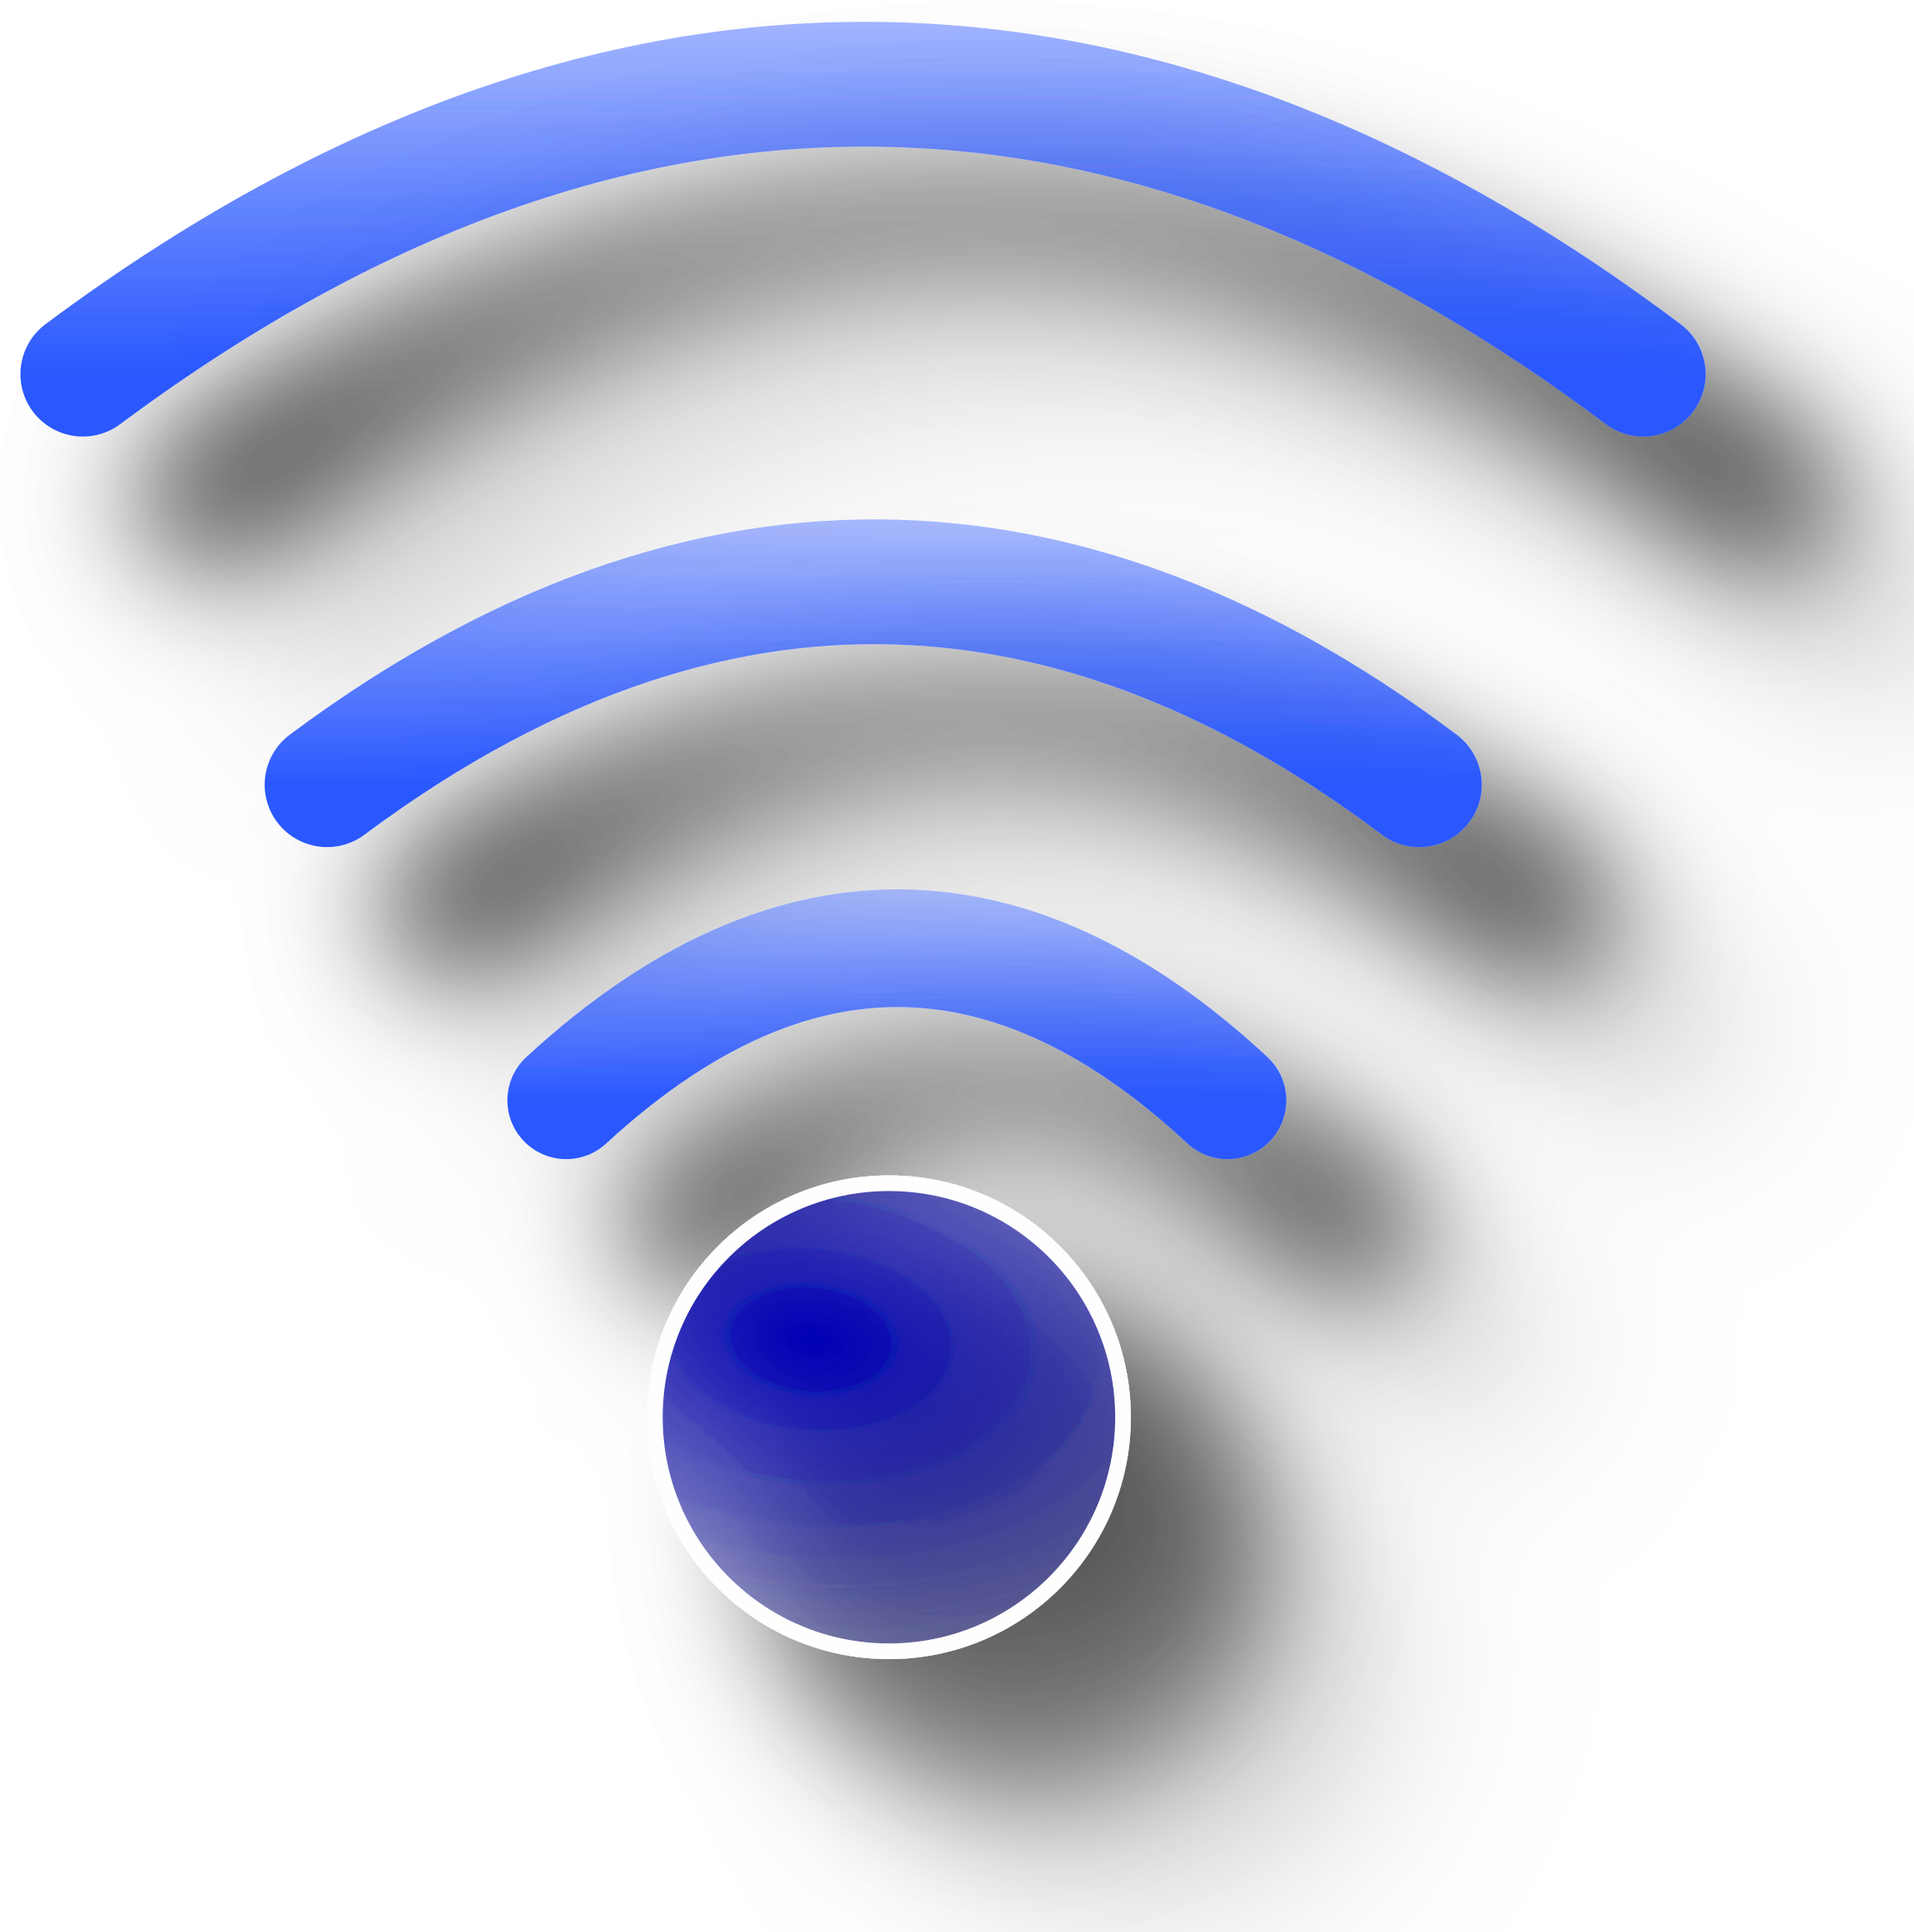 Wifi user